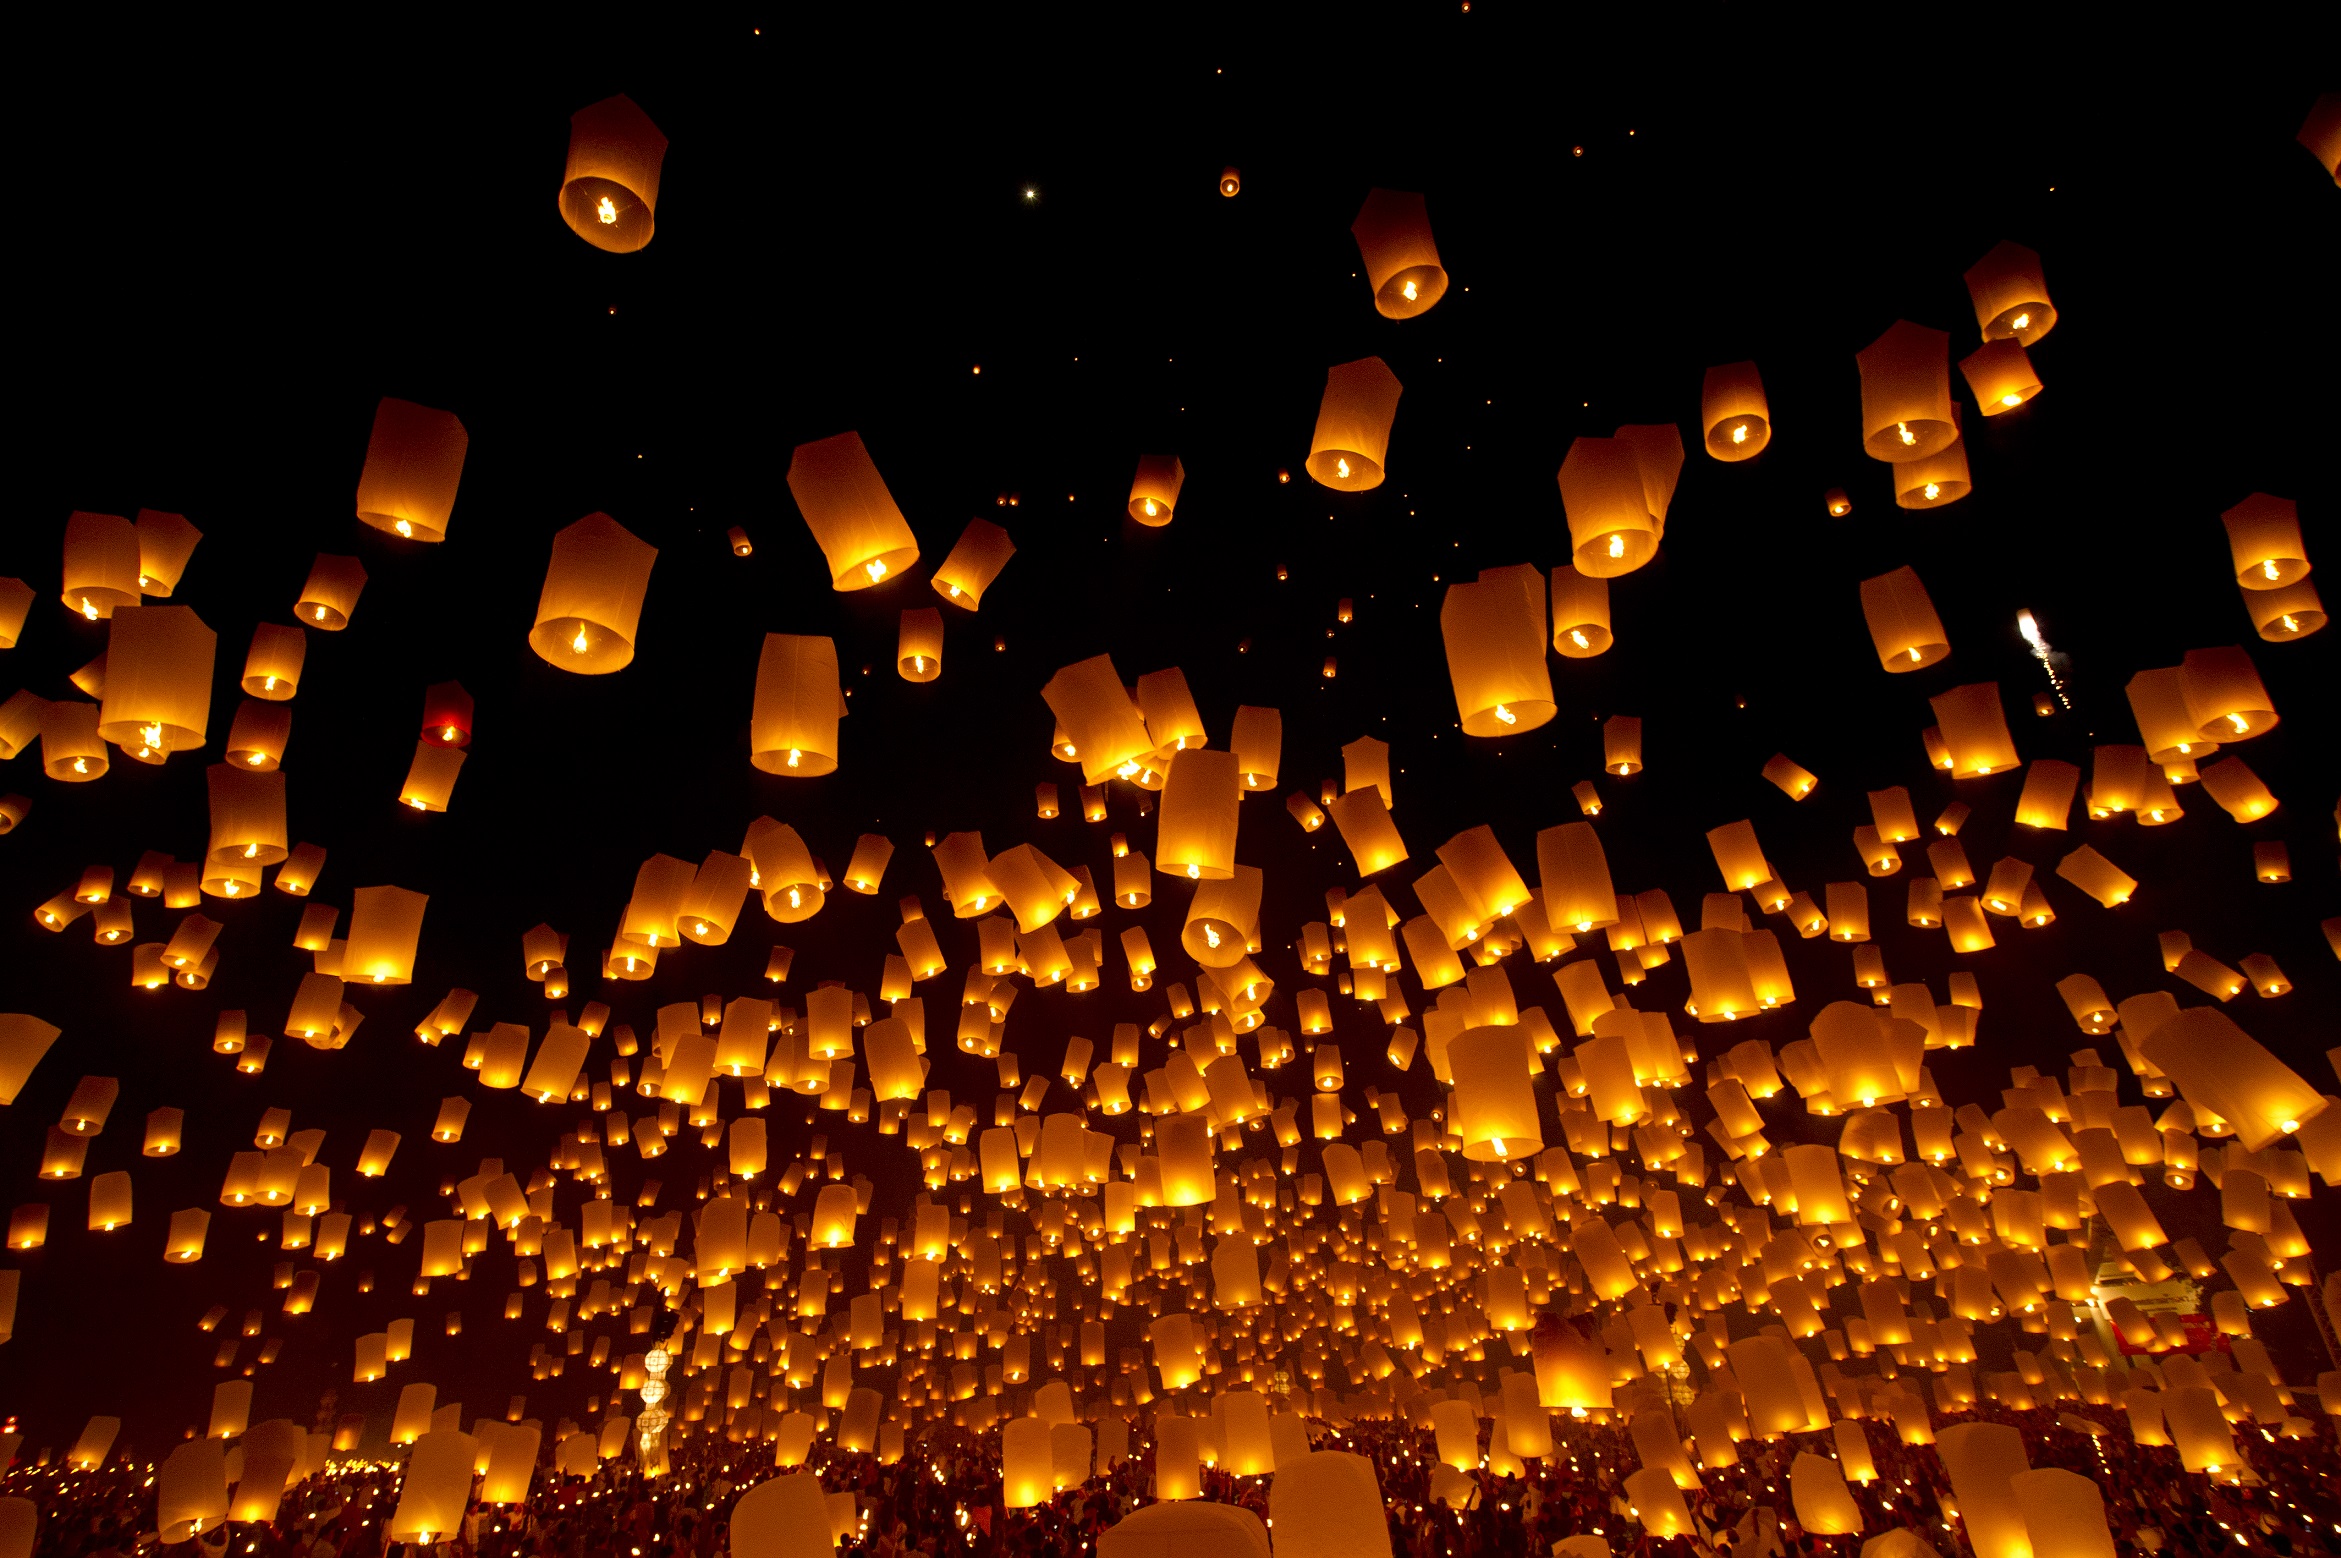 Celebration of Lantern Festival in Thailand.